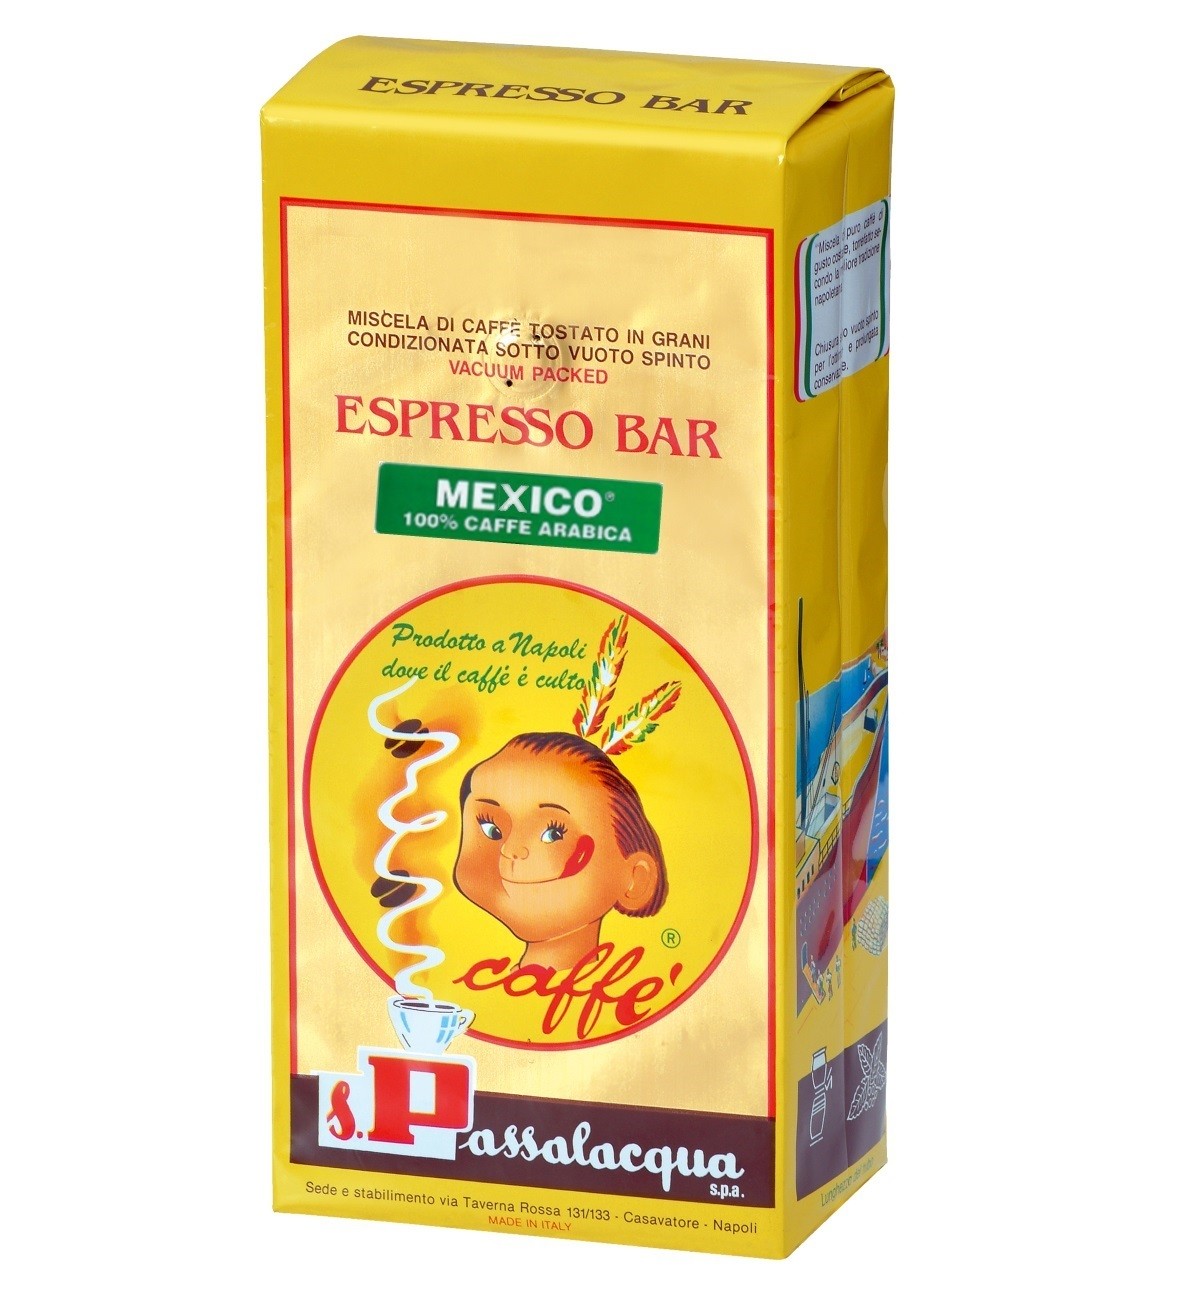 Passalacqua Mexico, Bohnen